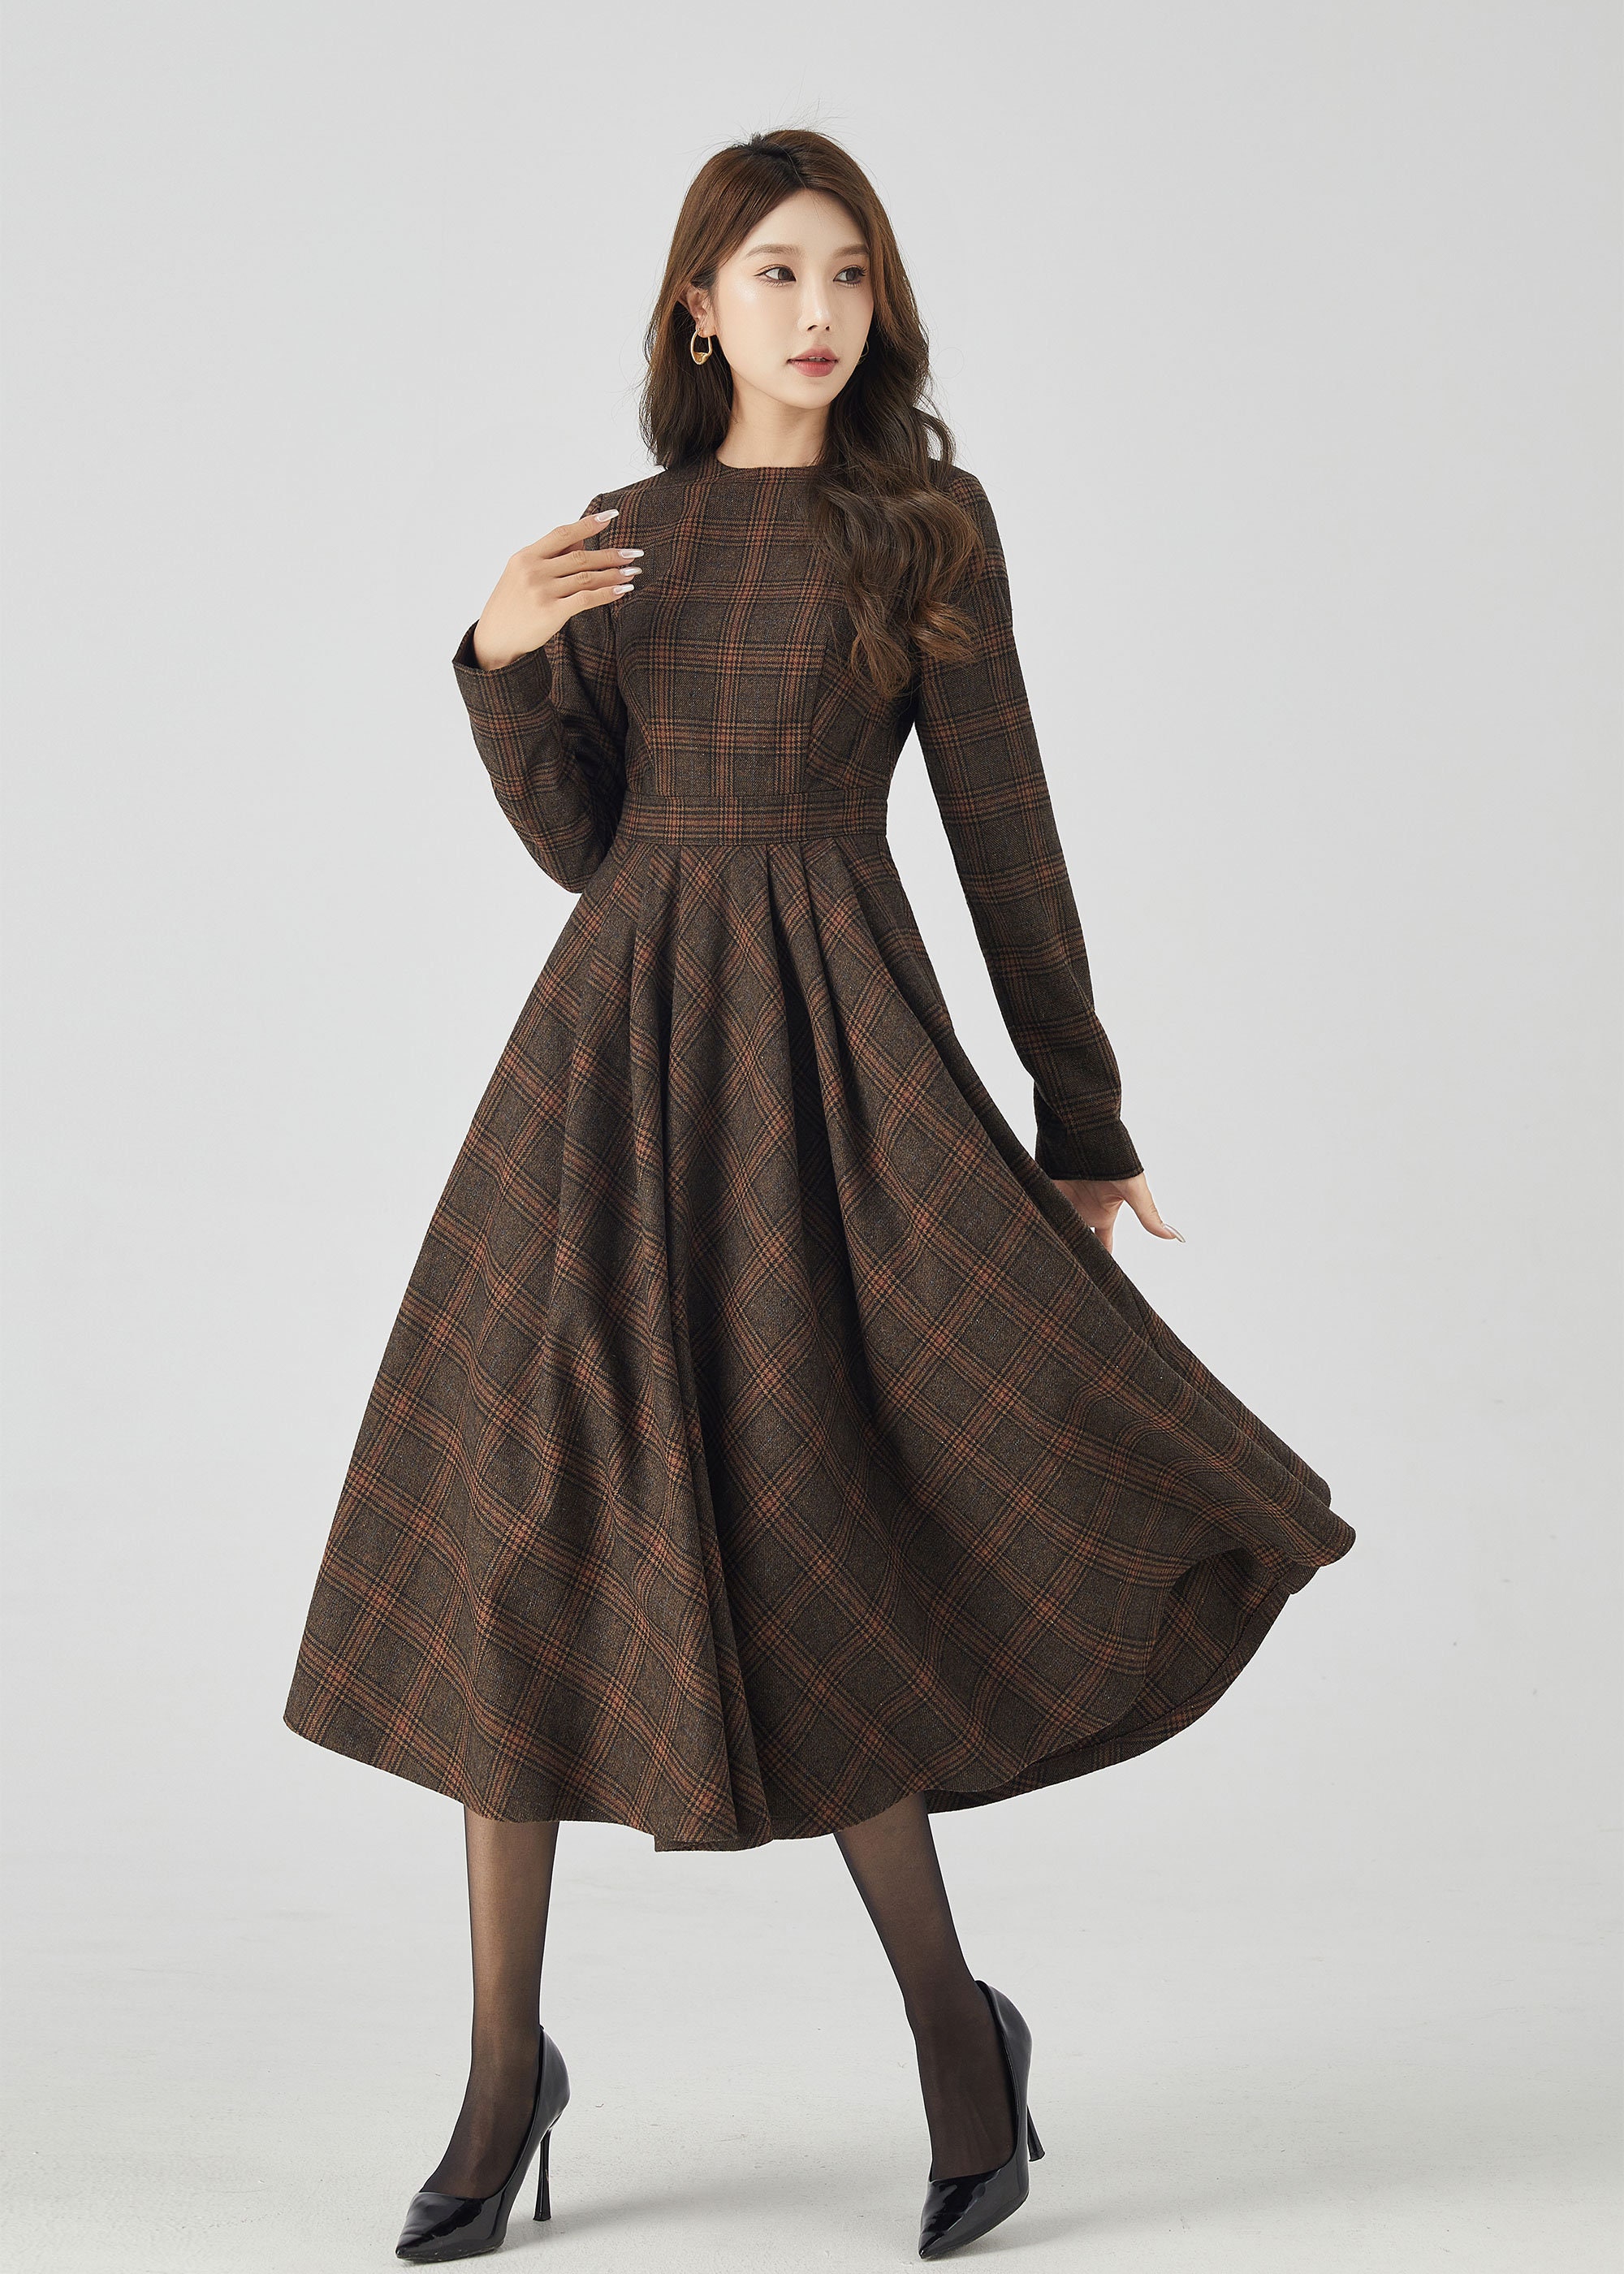 Long Sleeve Asymmetrical Dress - Just For Kix